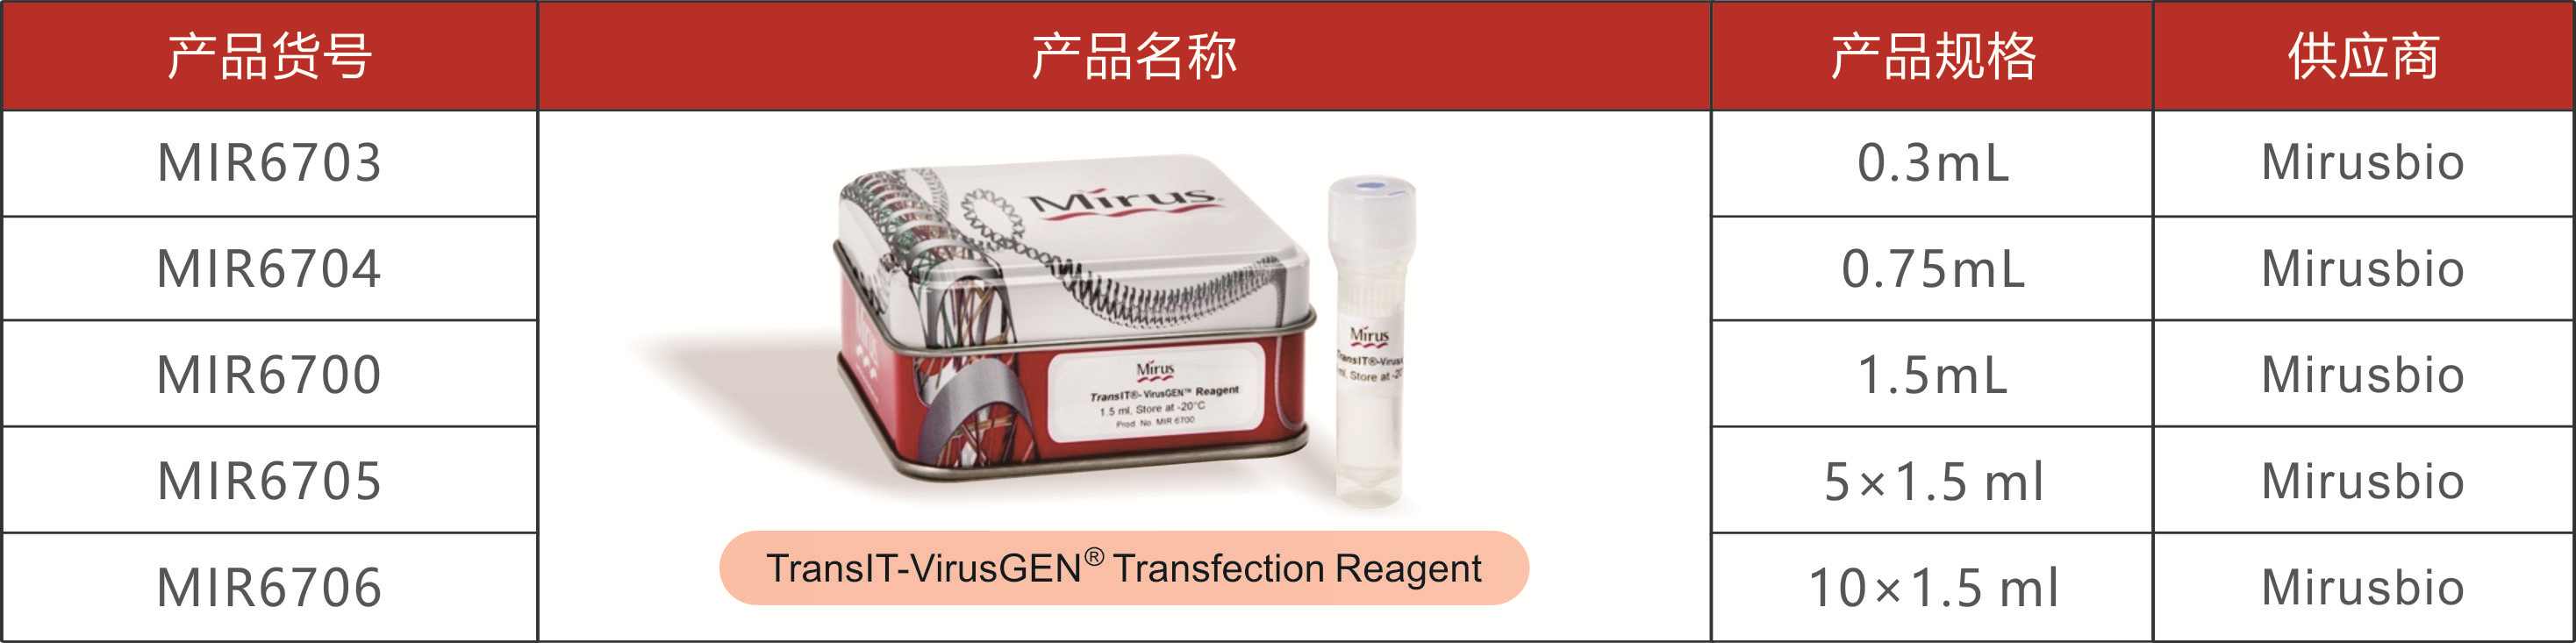 【Mirus新品推荐】TransIT-VirusGEN® Transfection Reagent